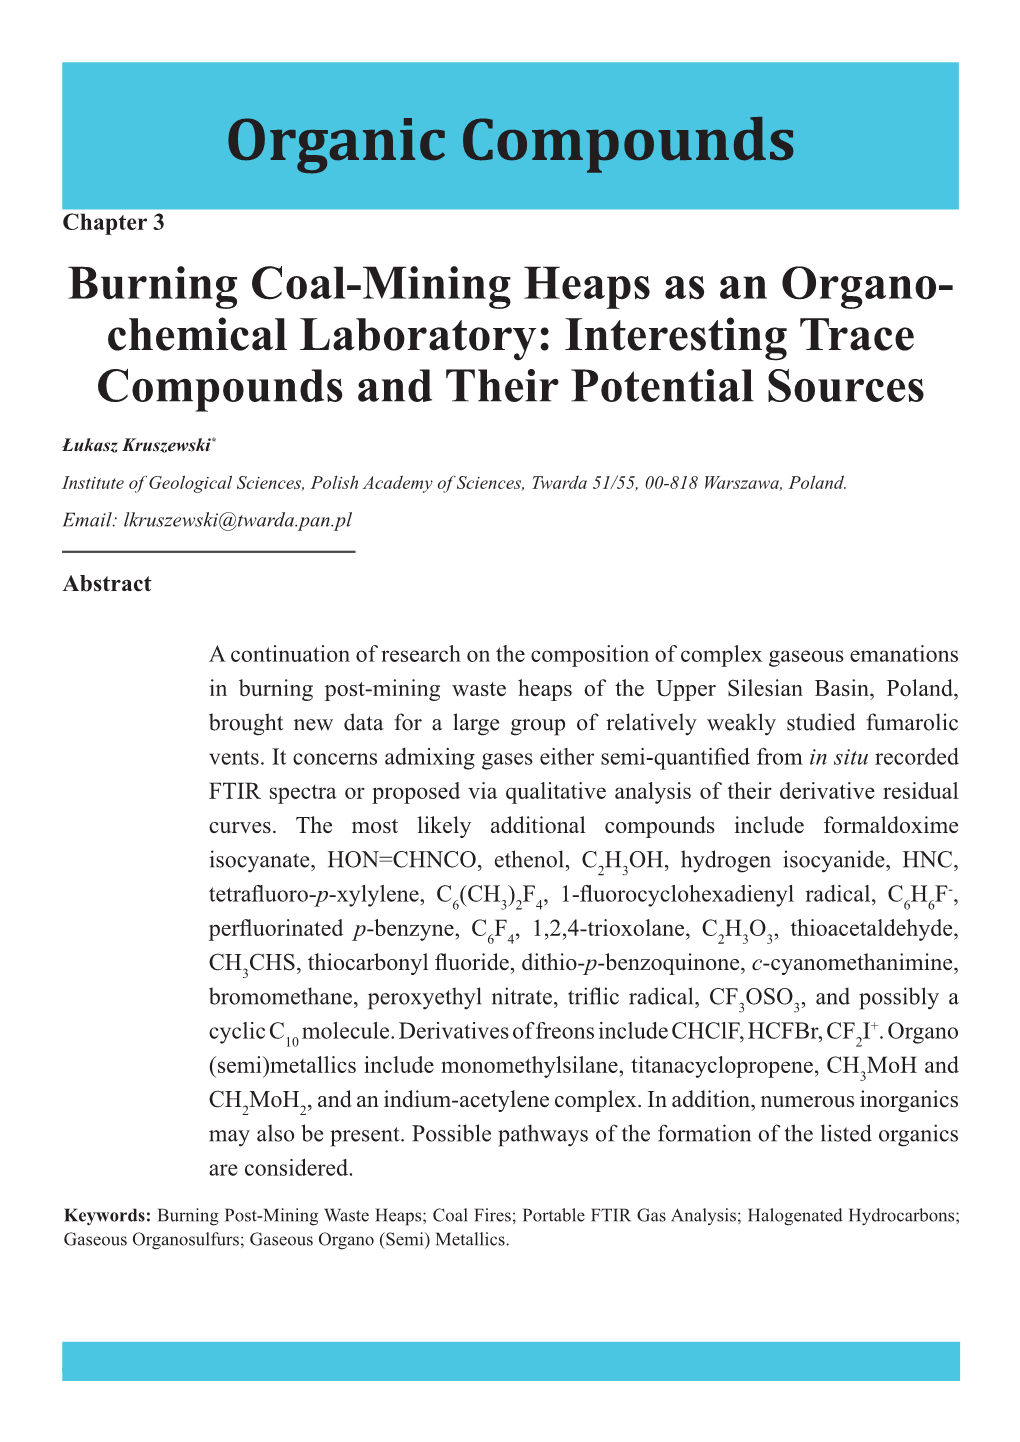 Burning Coal-Mining Heaps As an Organochemical Laboratory